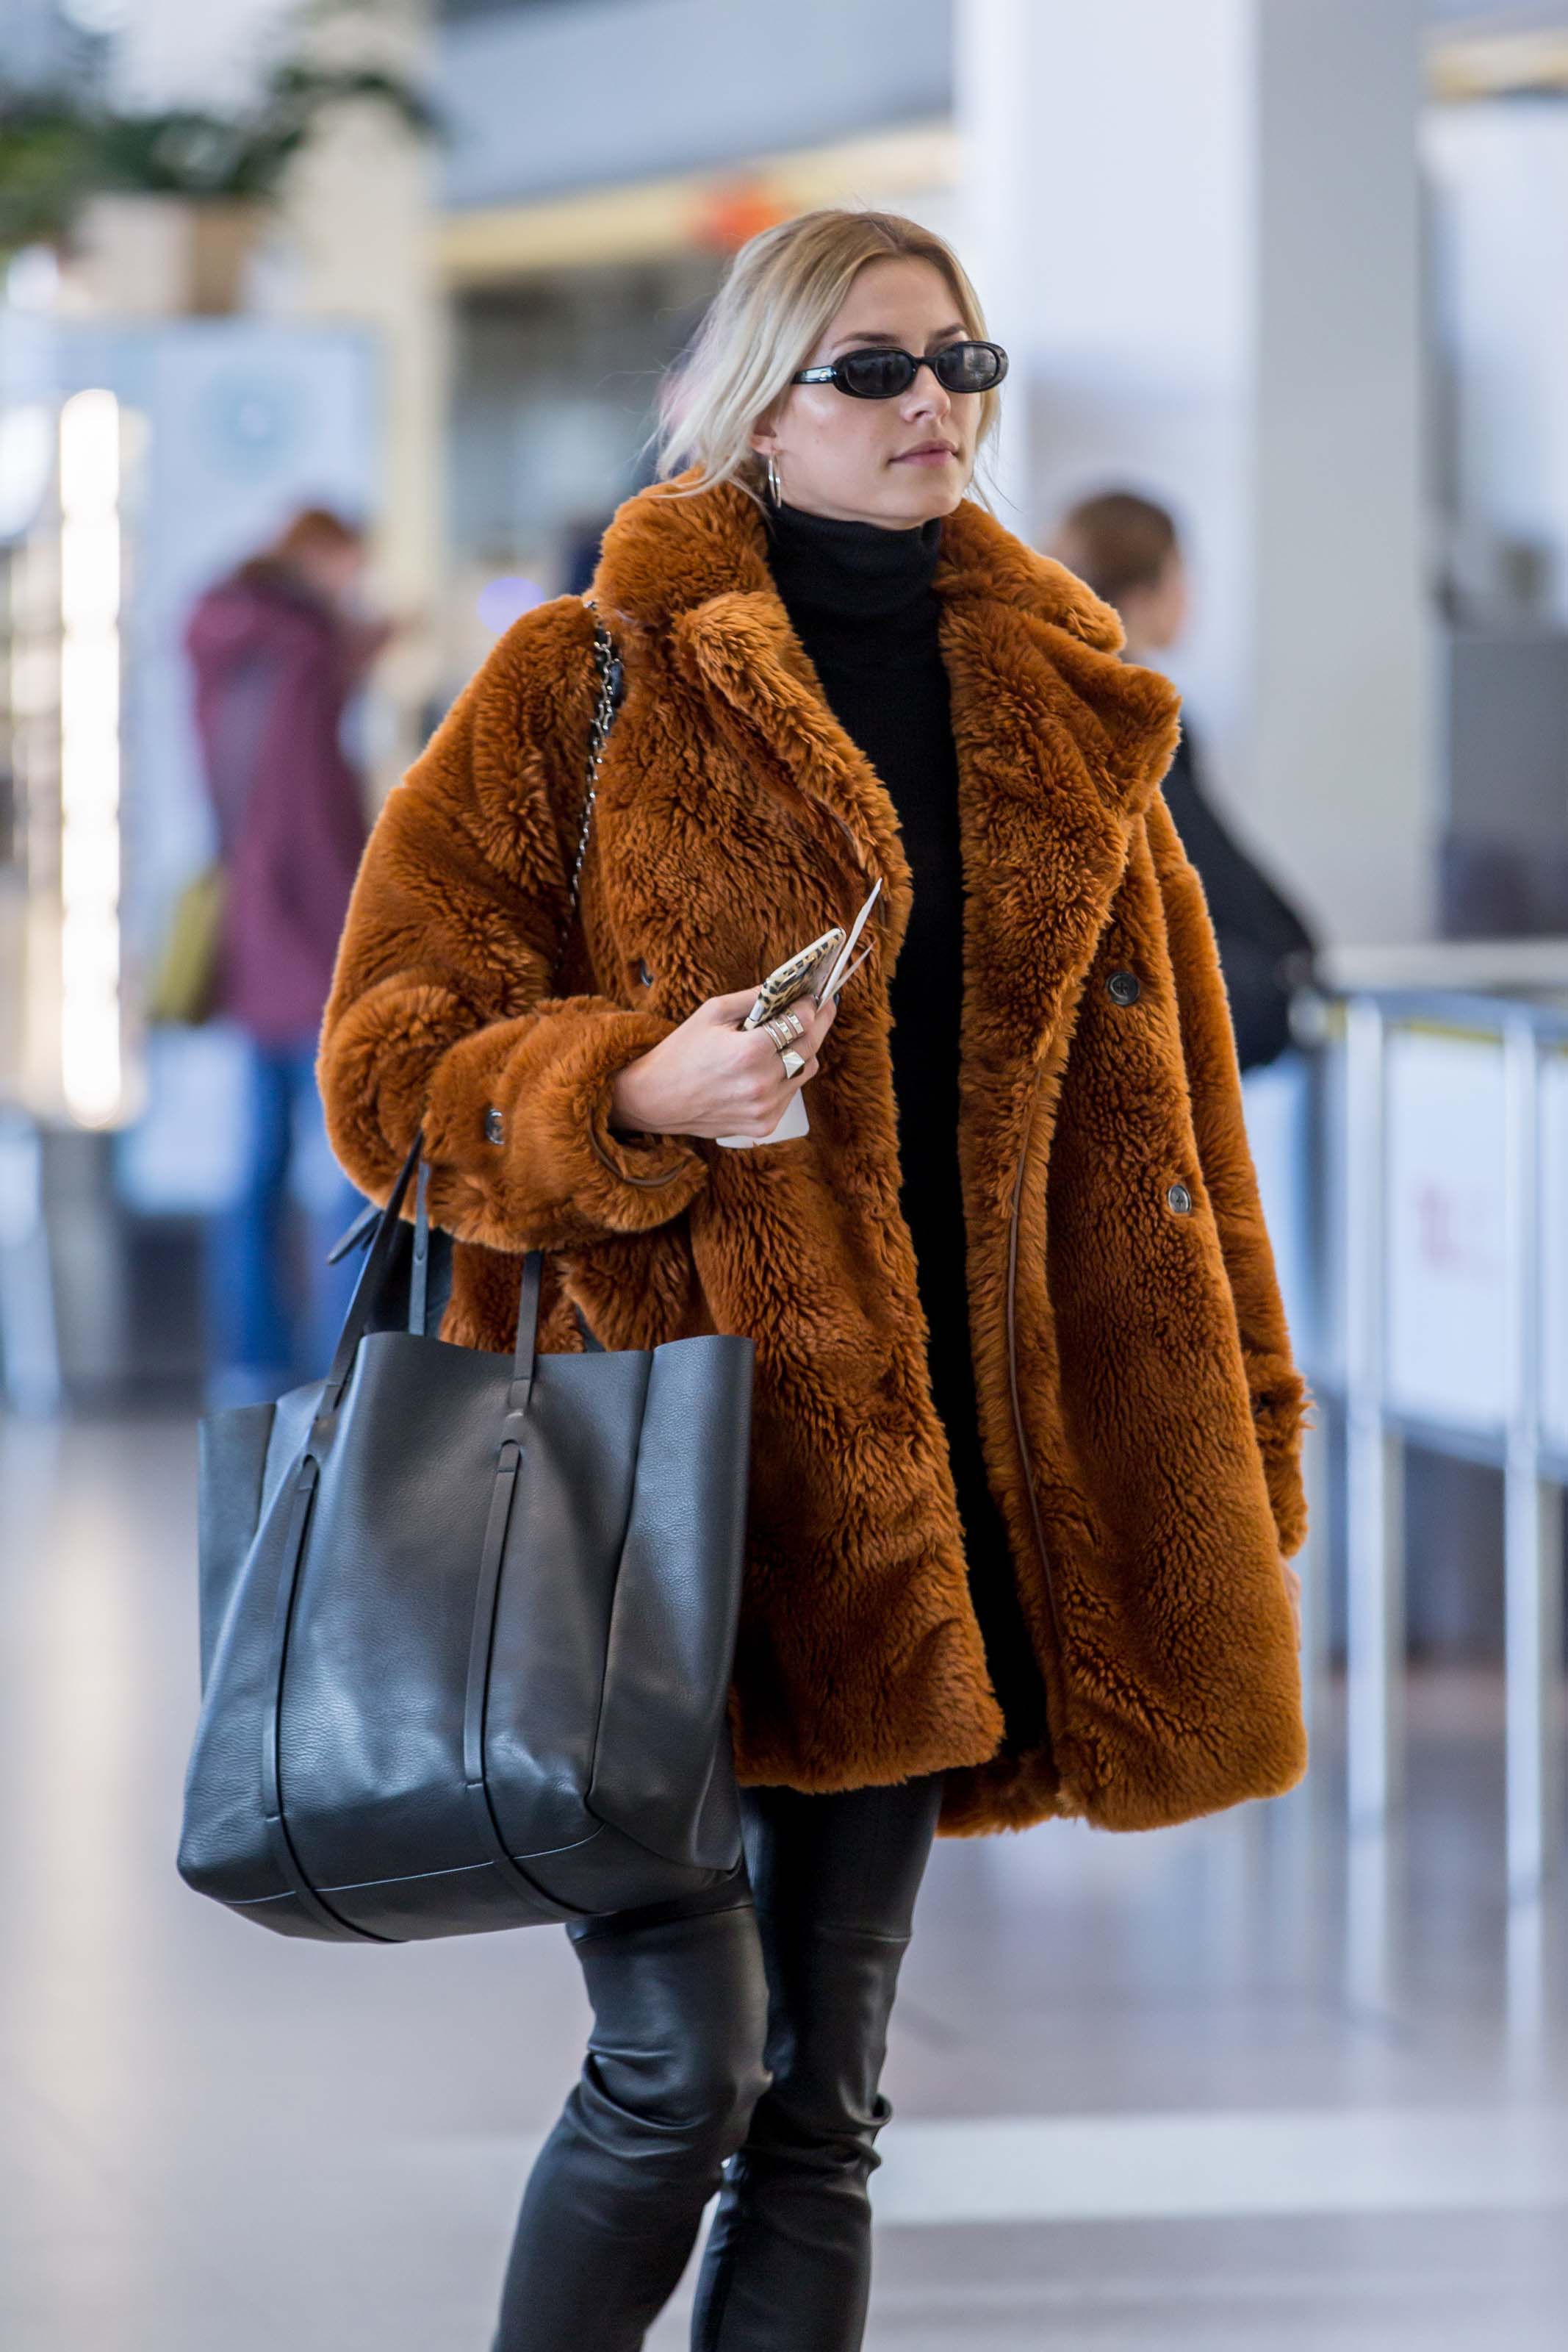 Lena Gercke seen at Tegel Airport